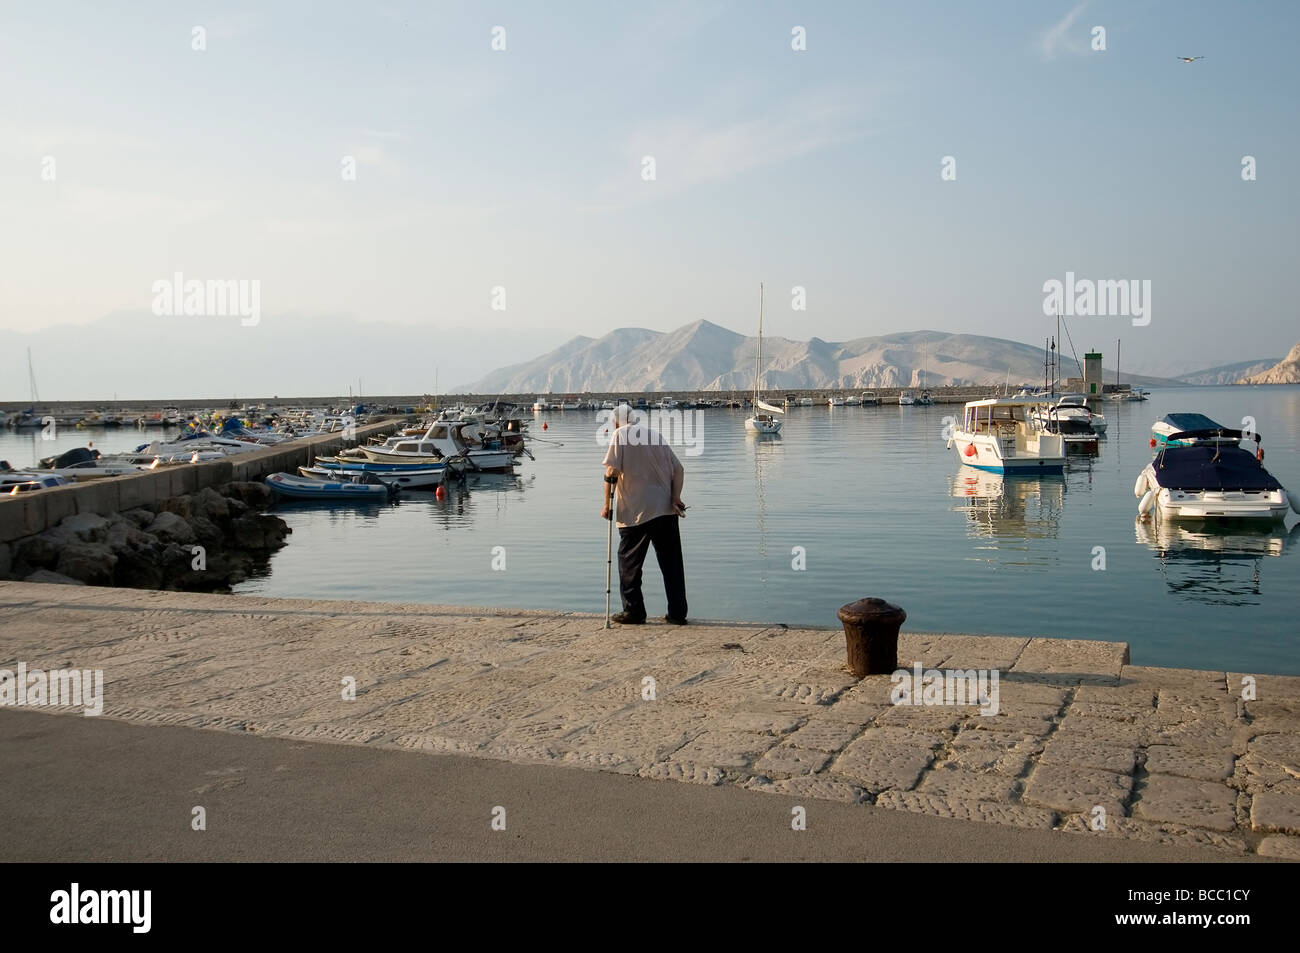 An elderly man walks on the dock of the port Stock Photo